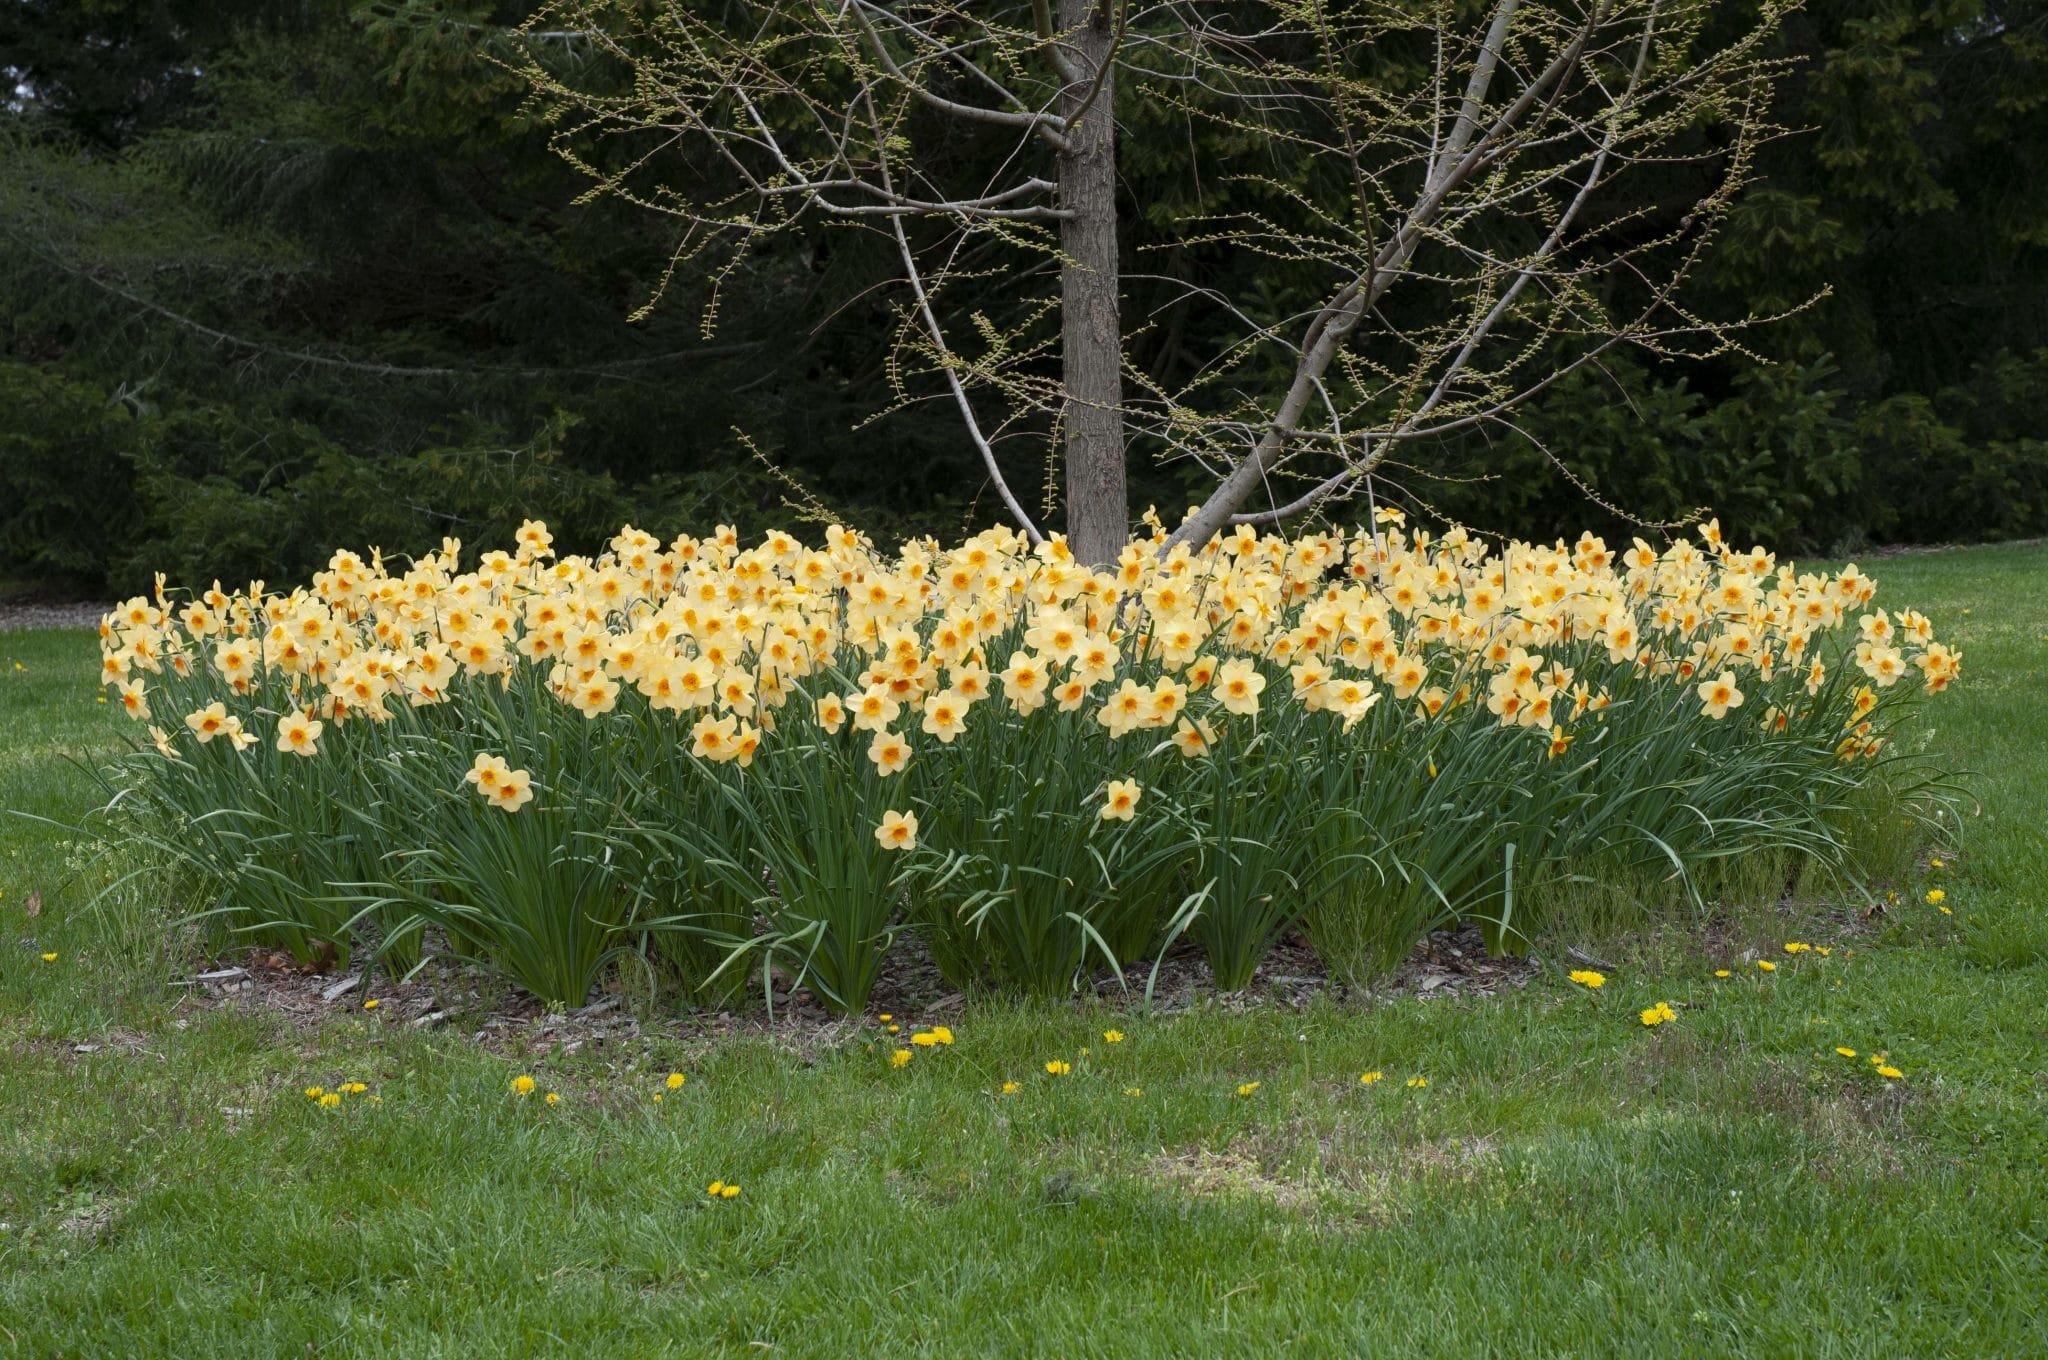 Kedron daffodils